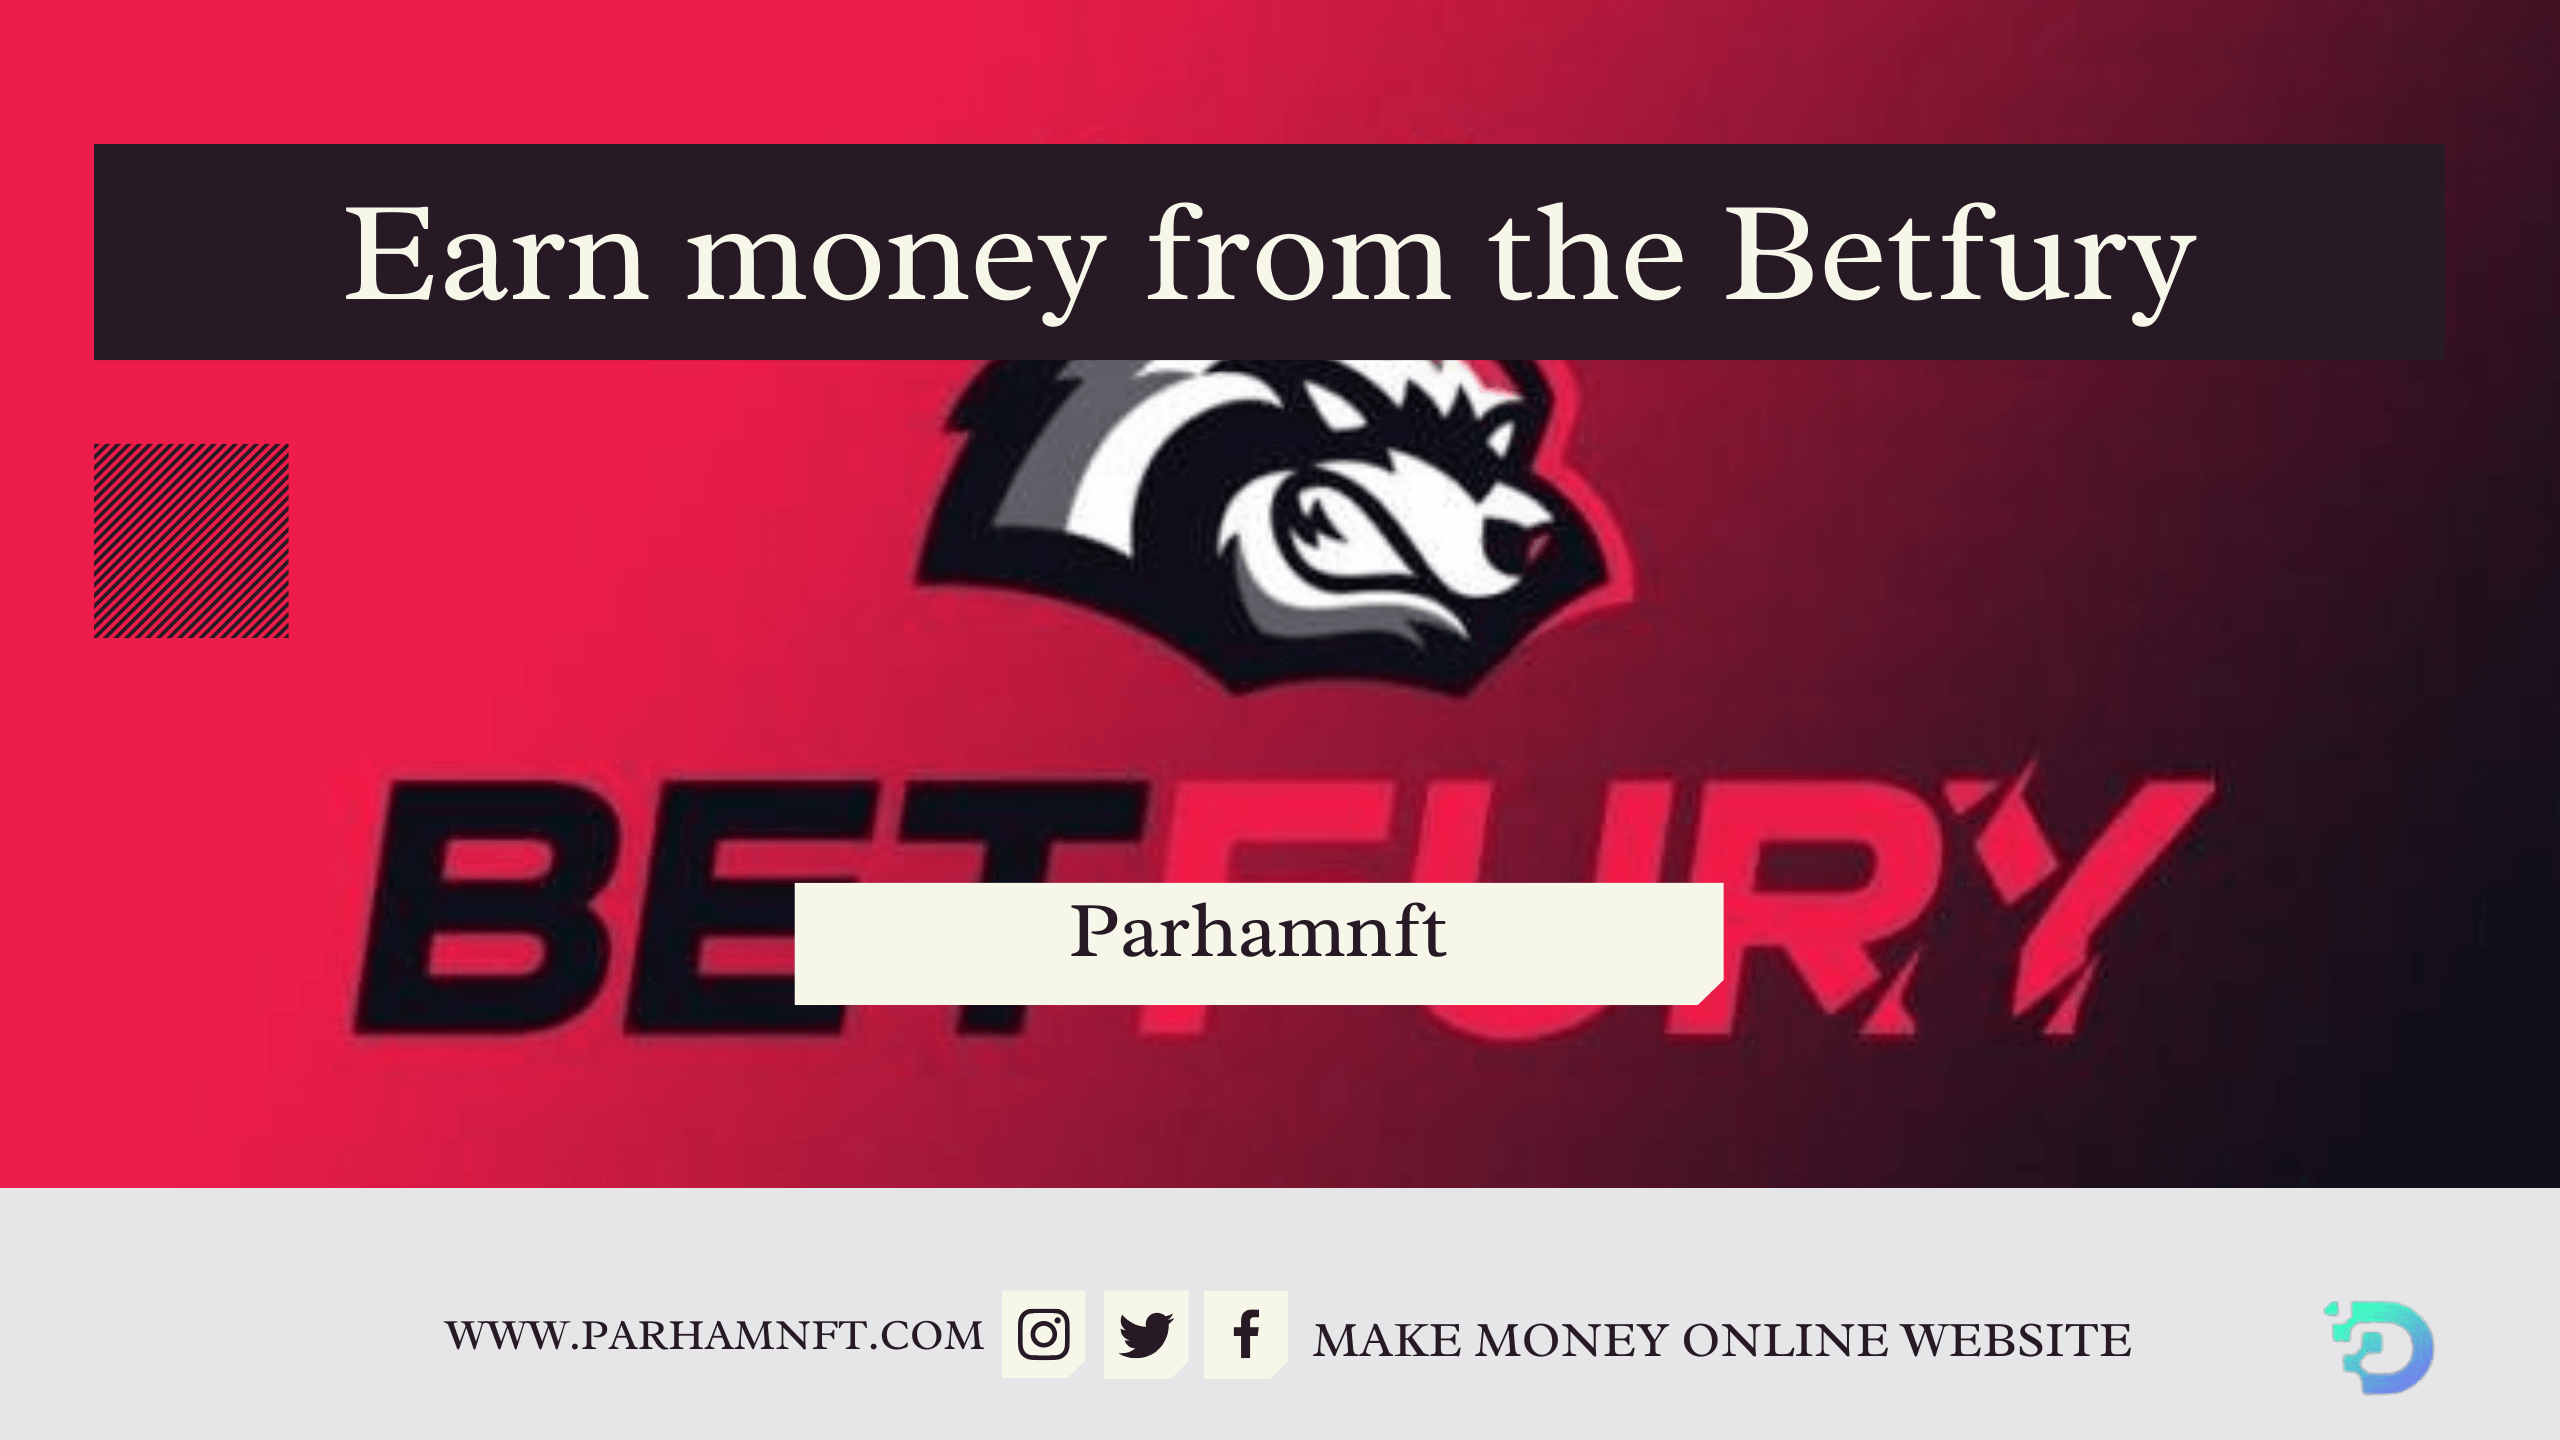 Earn money from the Betfury